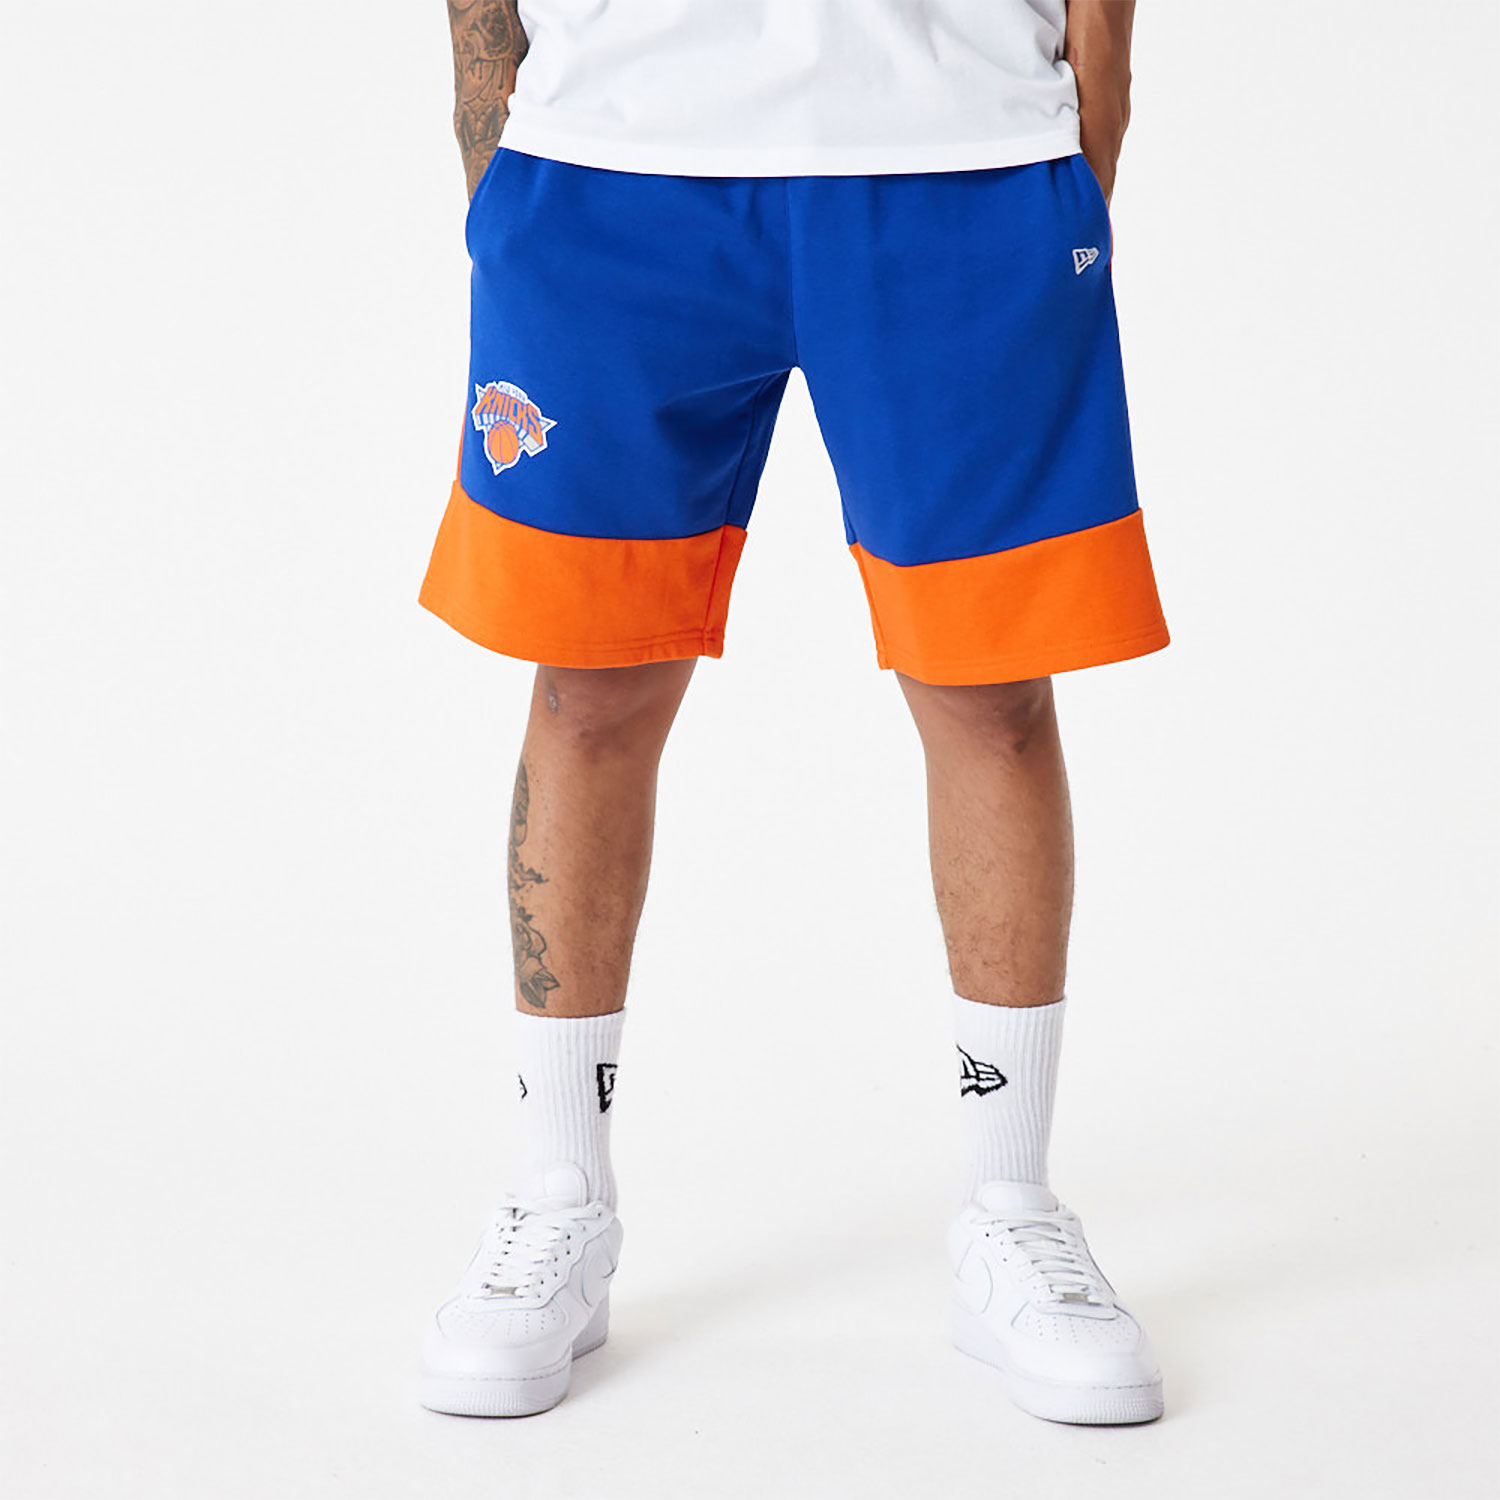 new york knicks basketball shorts